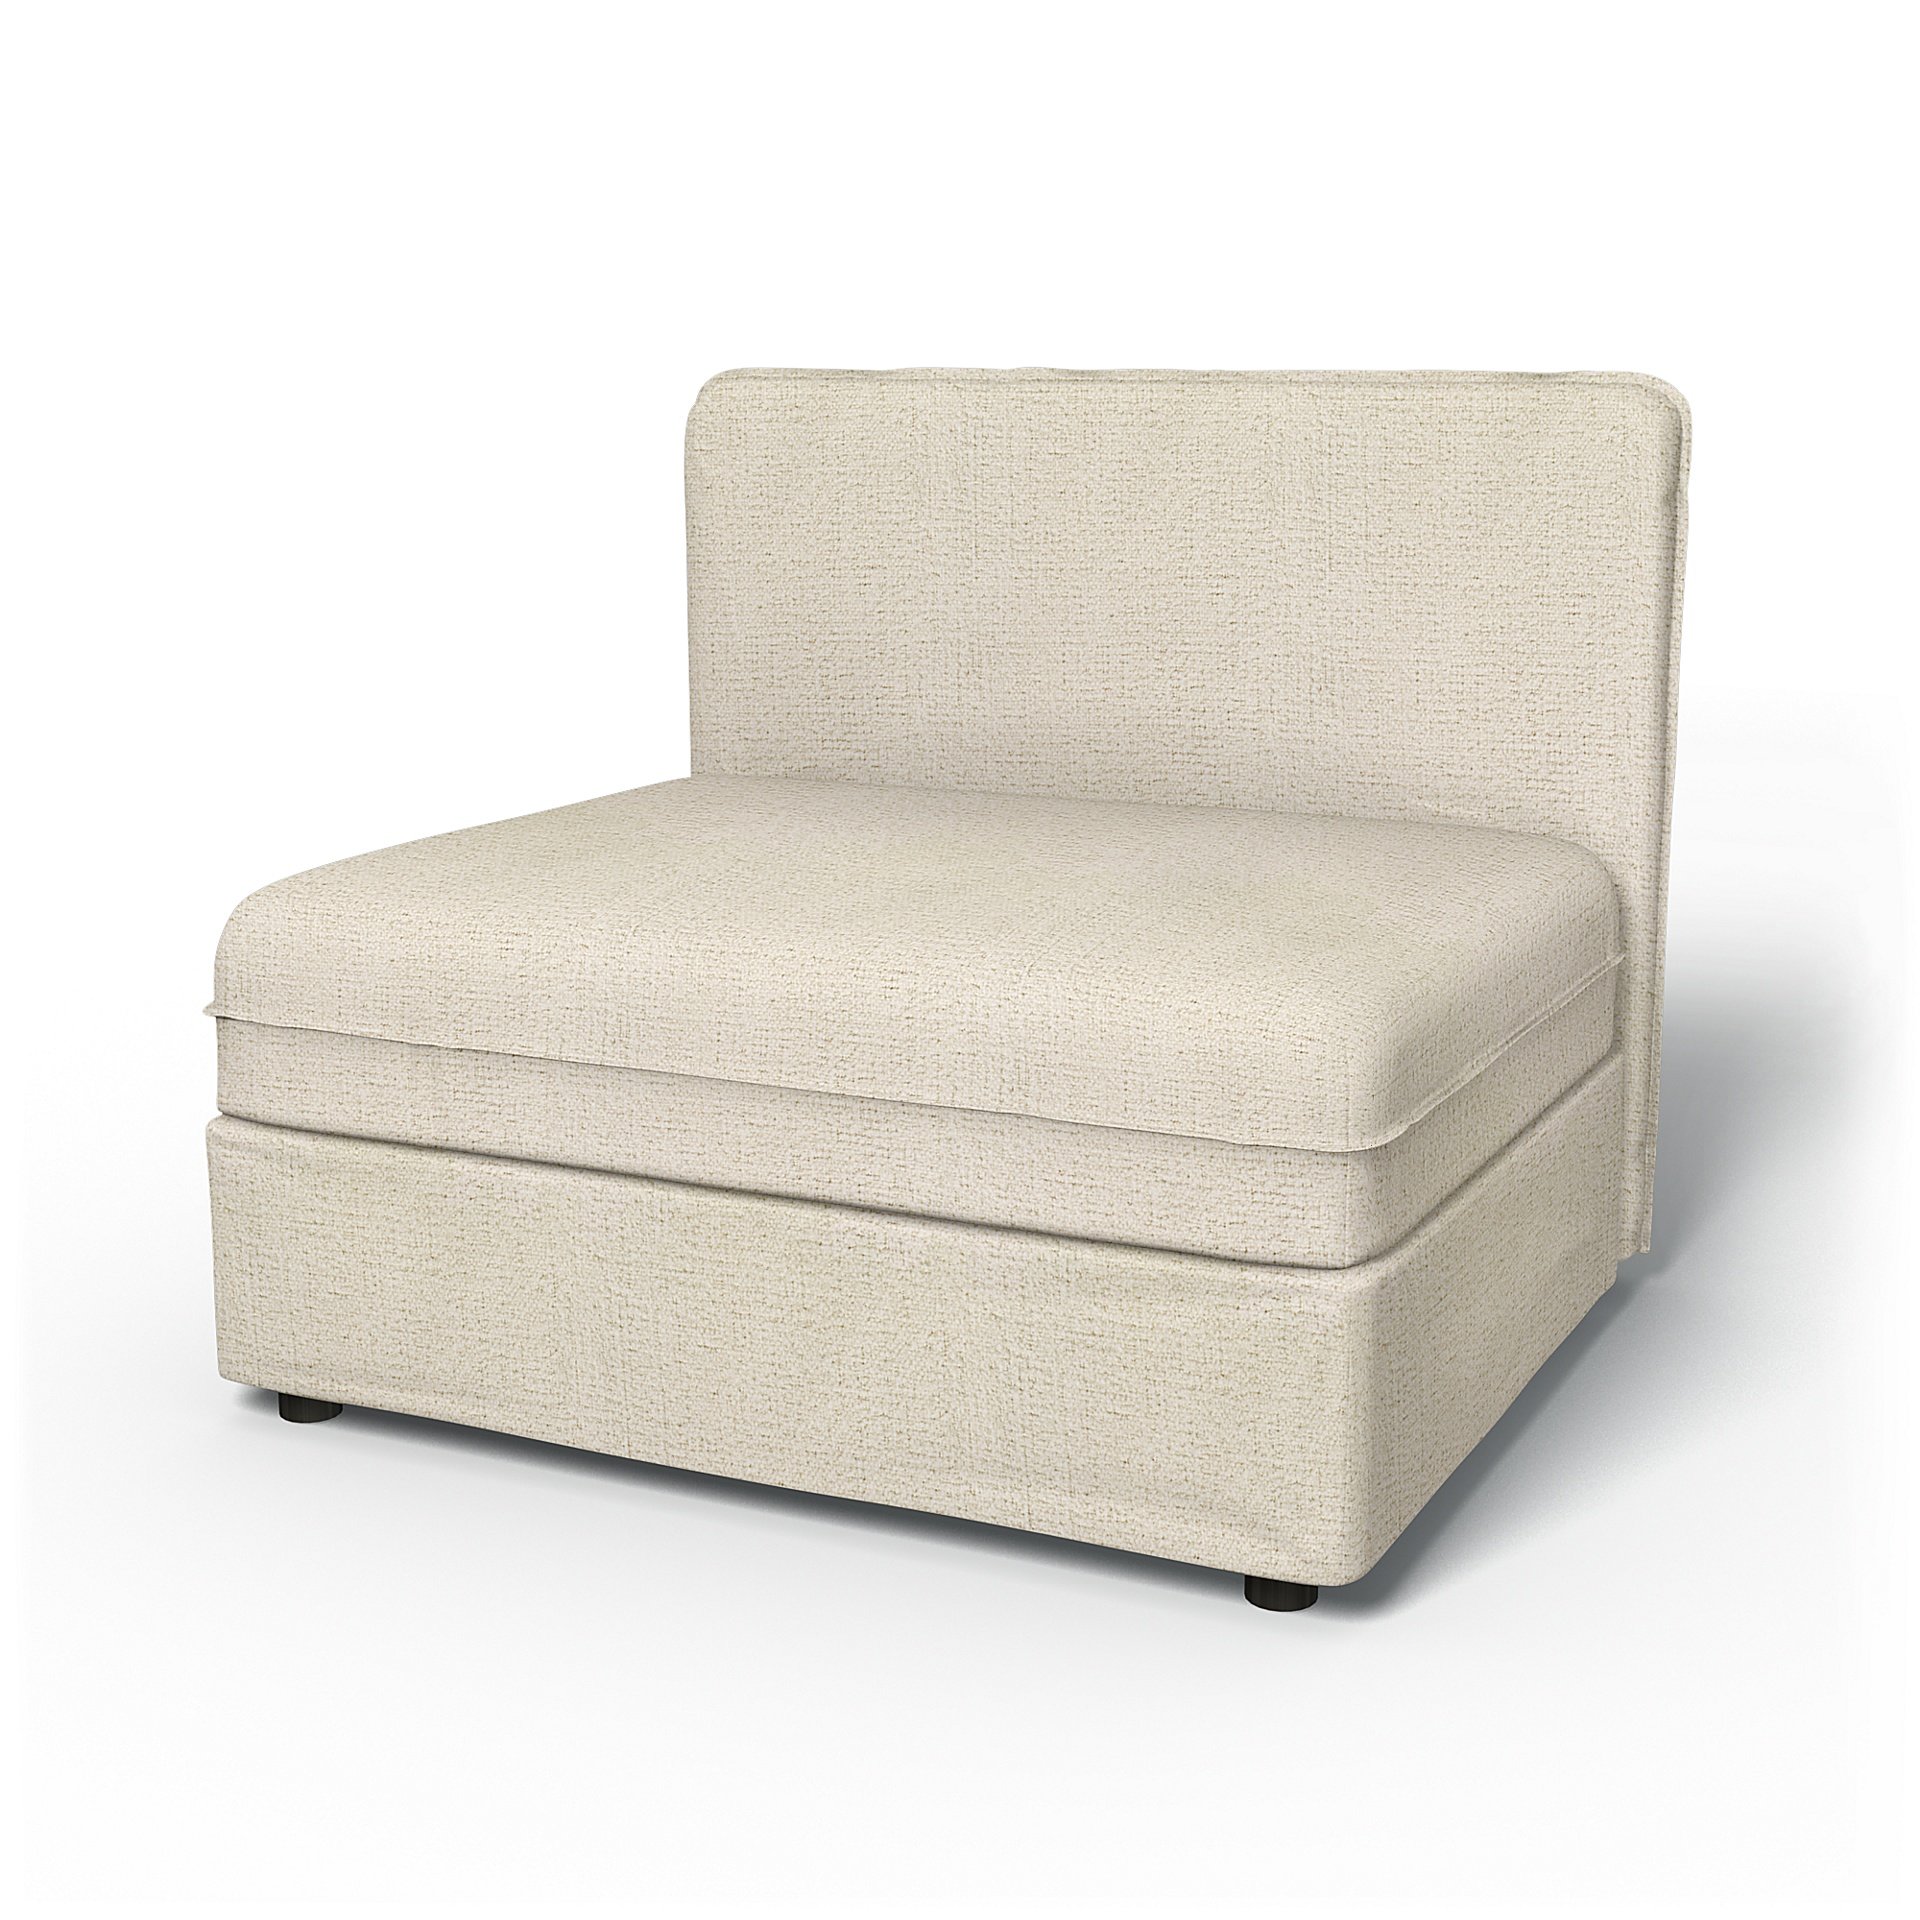 IKEA - Vallentuna Seat Module with Low Back Cover 100x80cm 39x32in, Ecru, Boucle & Texture - Bemz